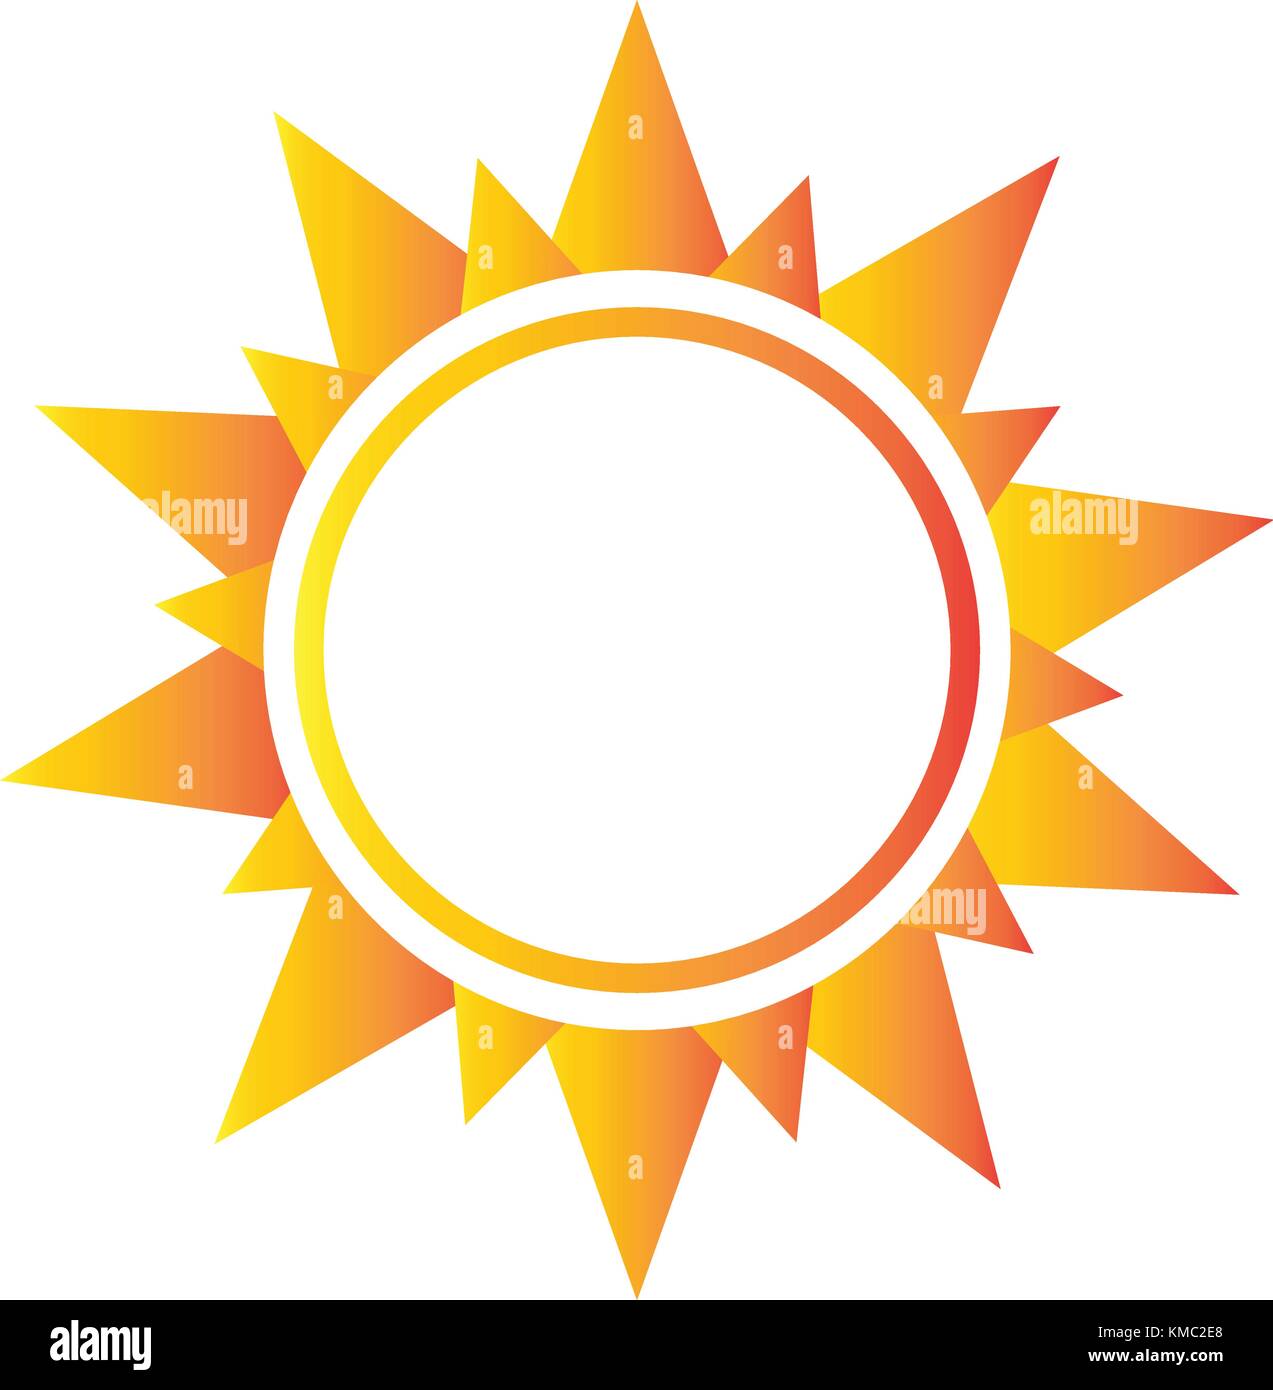 abstract sun shape Stock Vector